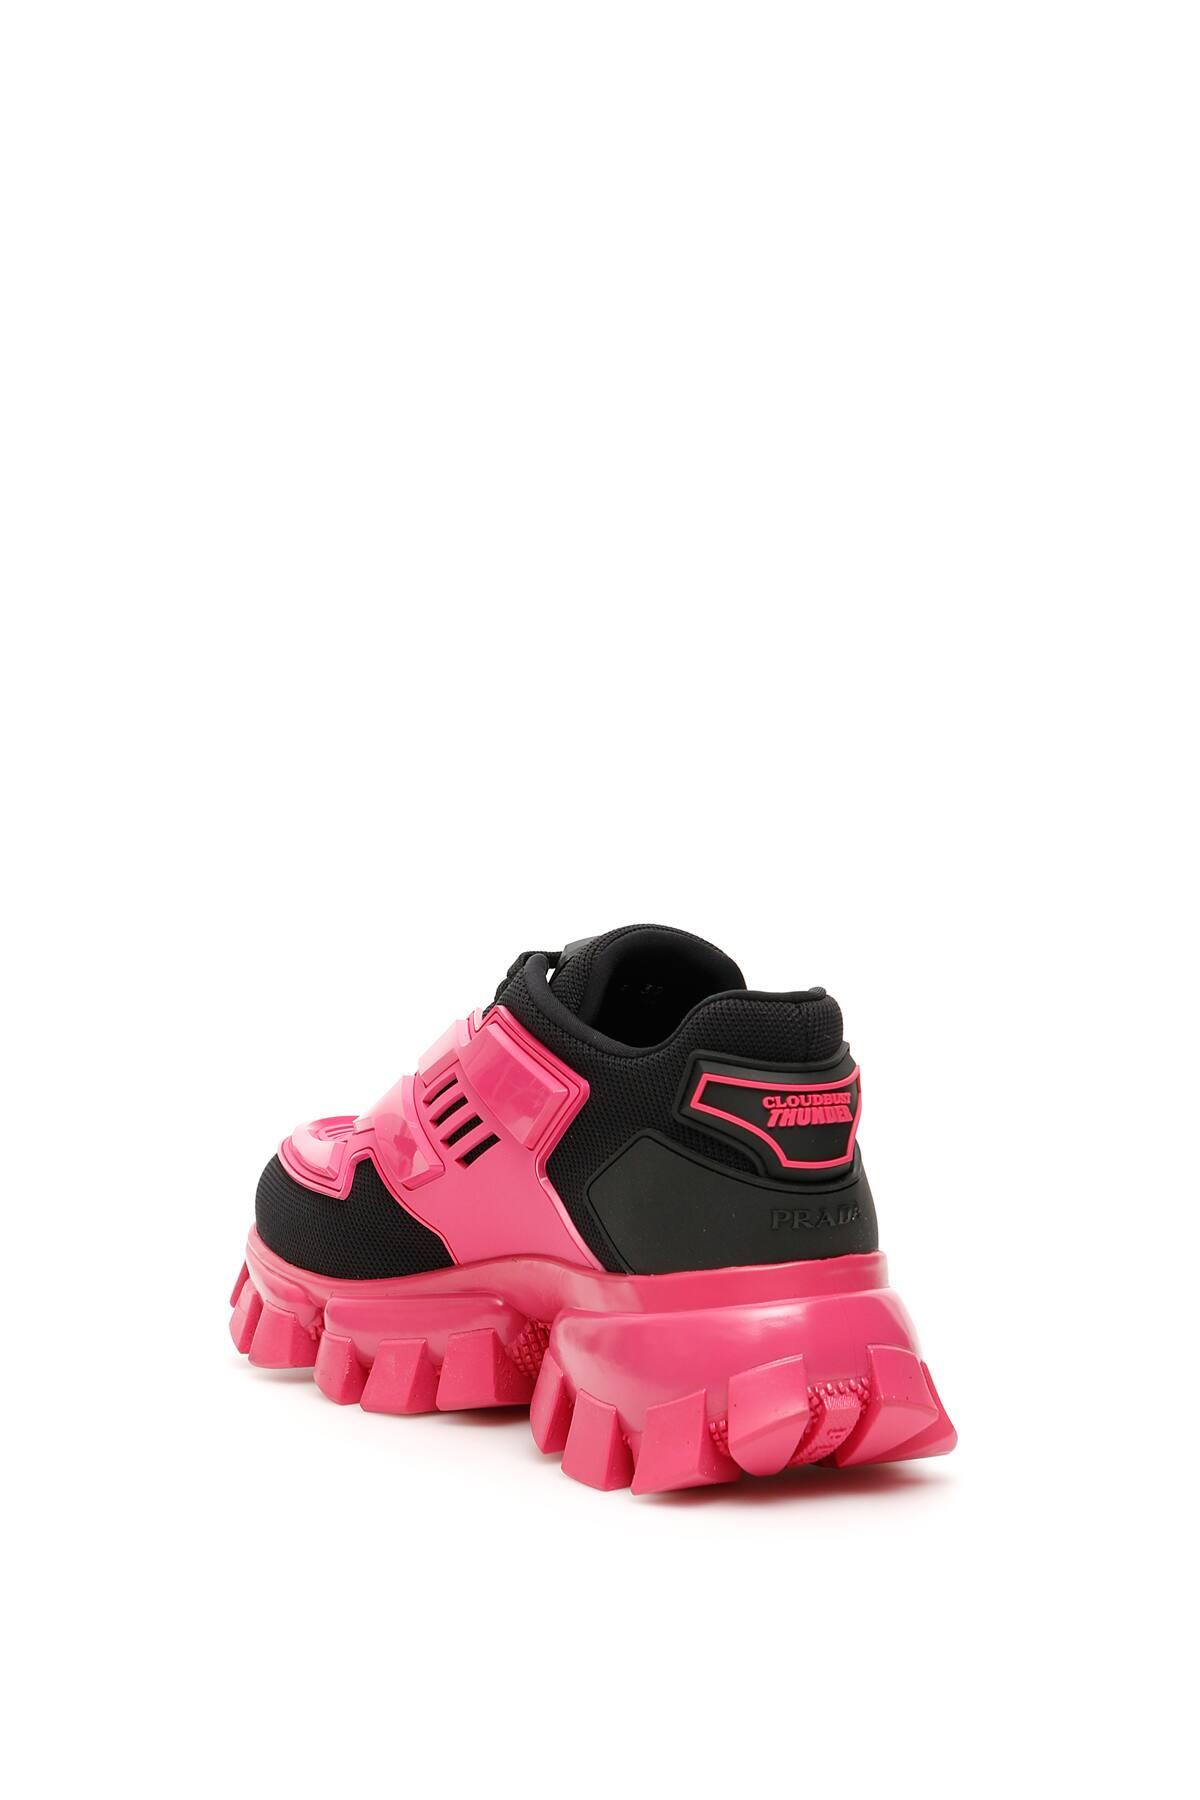 Prada Rubber Cloudburst Thunder Panelled Sneakers in Black,Fuchsia,Pink ( Pink) | Lyst